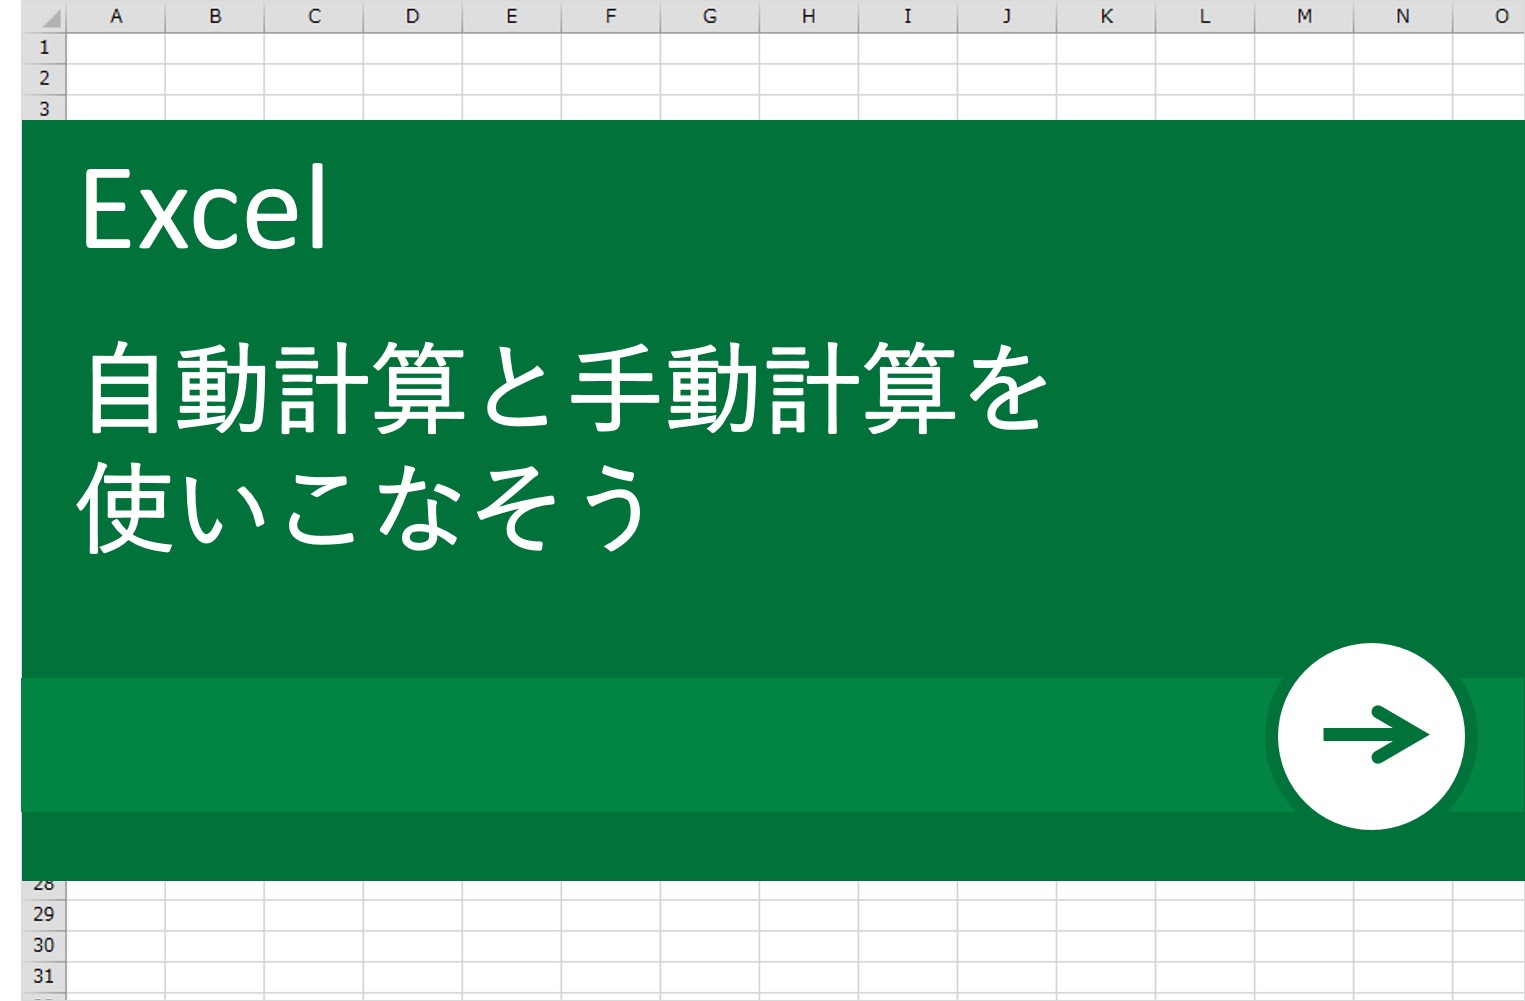 Excel エクセル 術 自動計算と手動計算を使いこなそう リクナビnextジャーナル